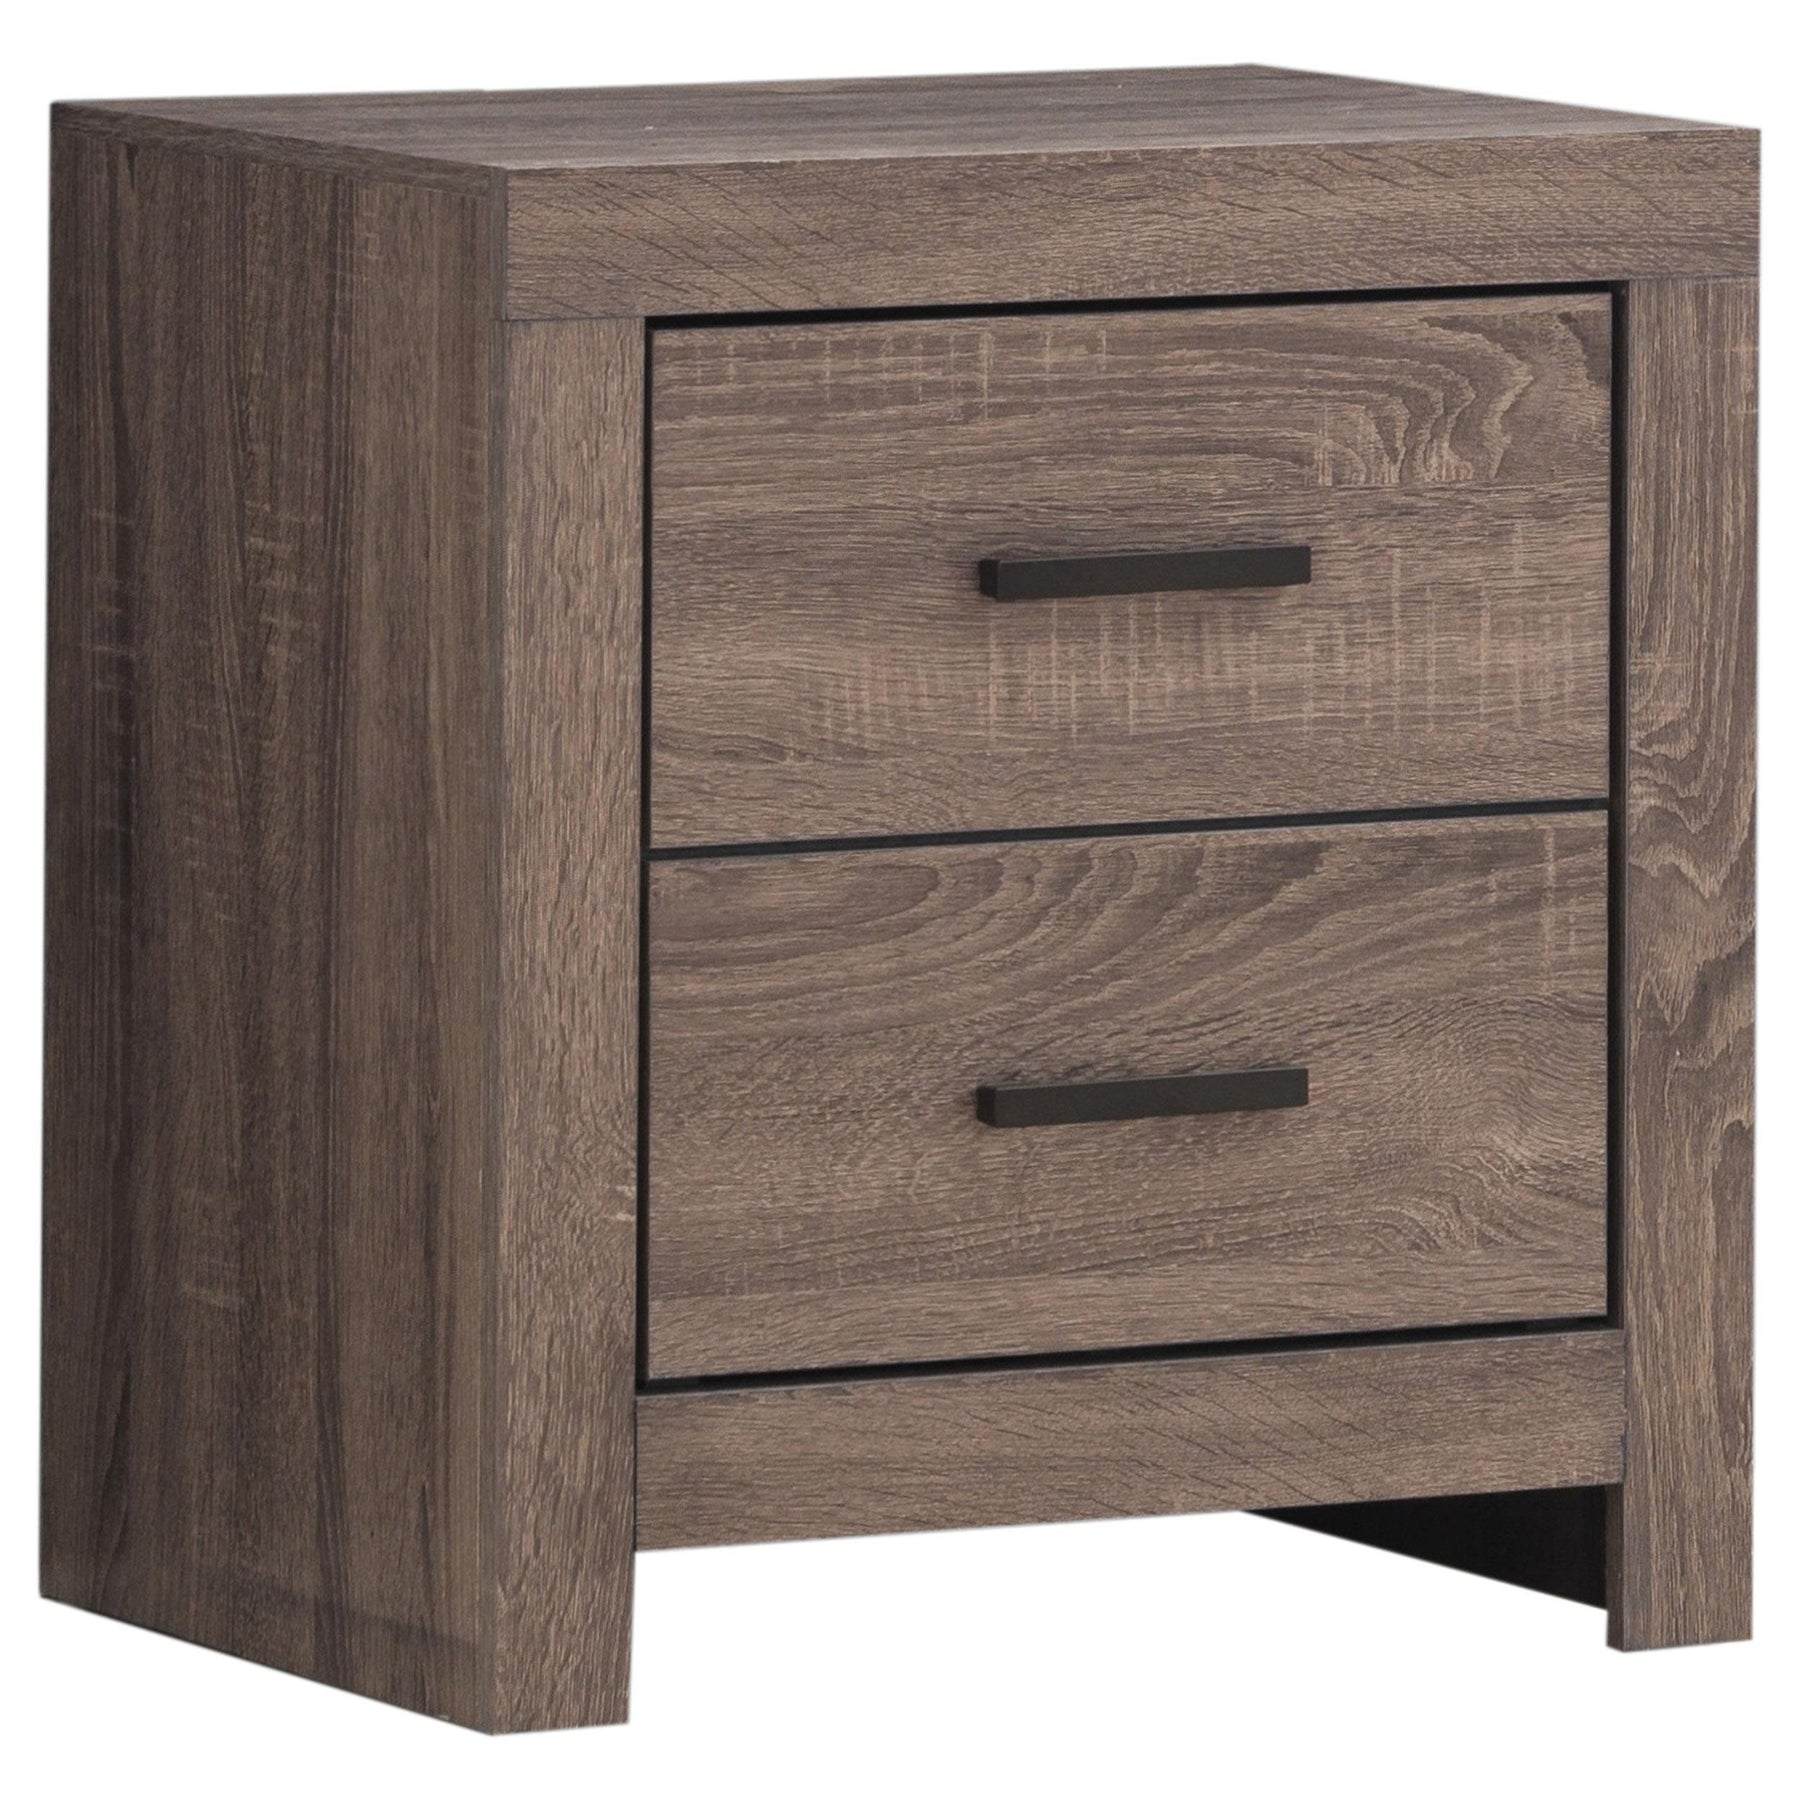 Brantford 2-drawer Nightstand Barrel Oak Brantford 2-drawer Nightstand Barrel Oak Half Price Furniture